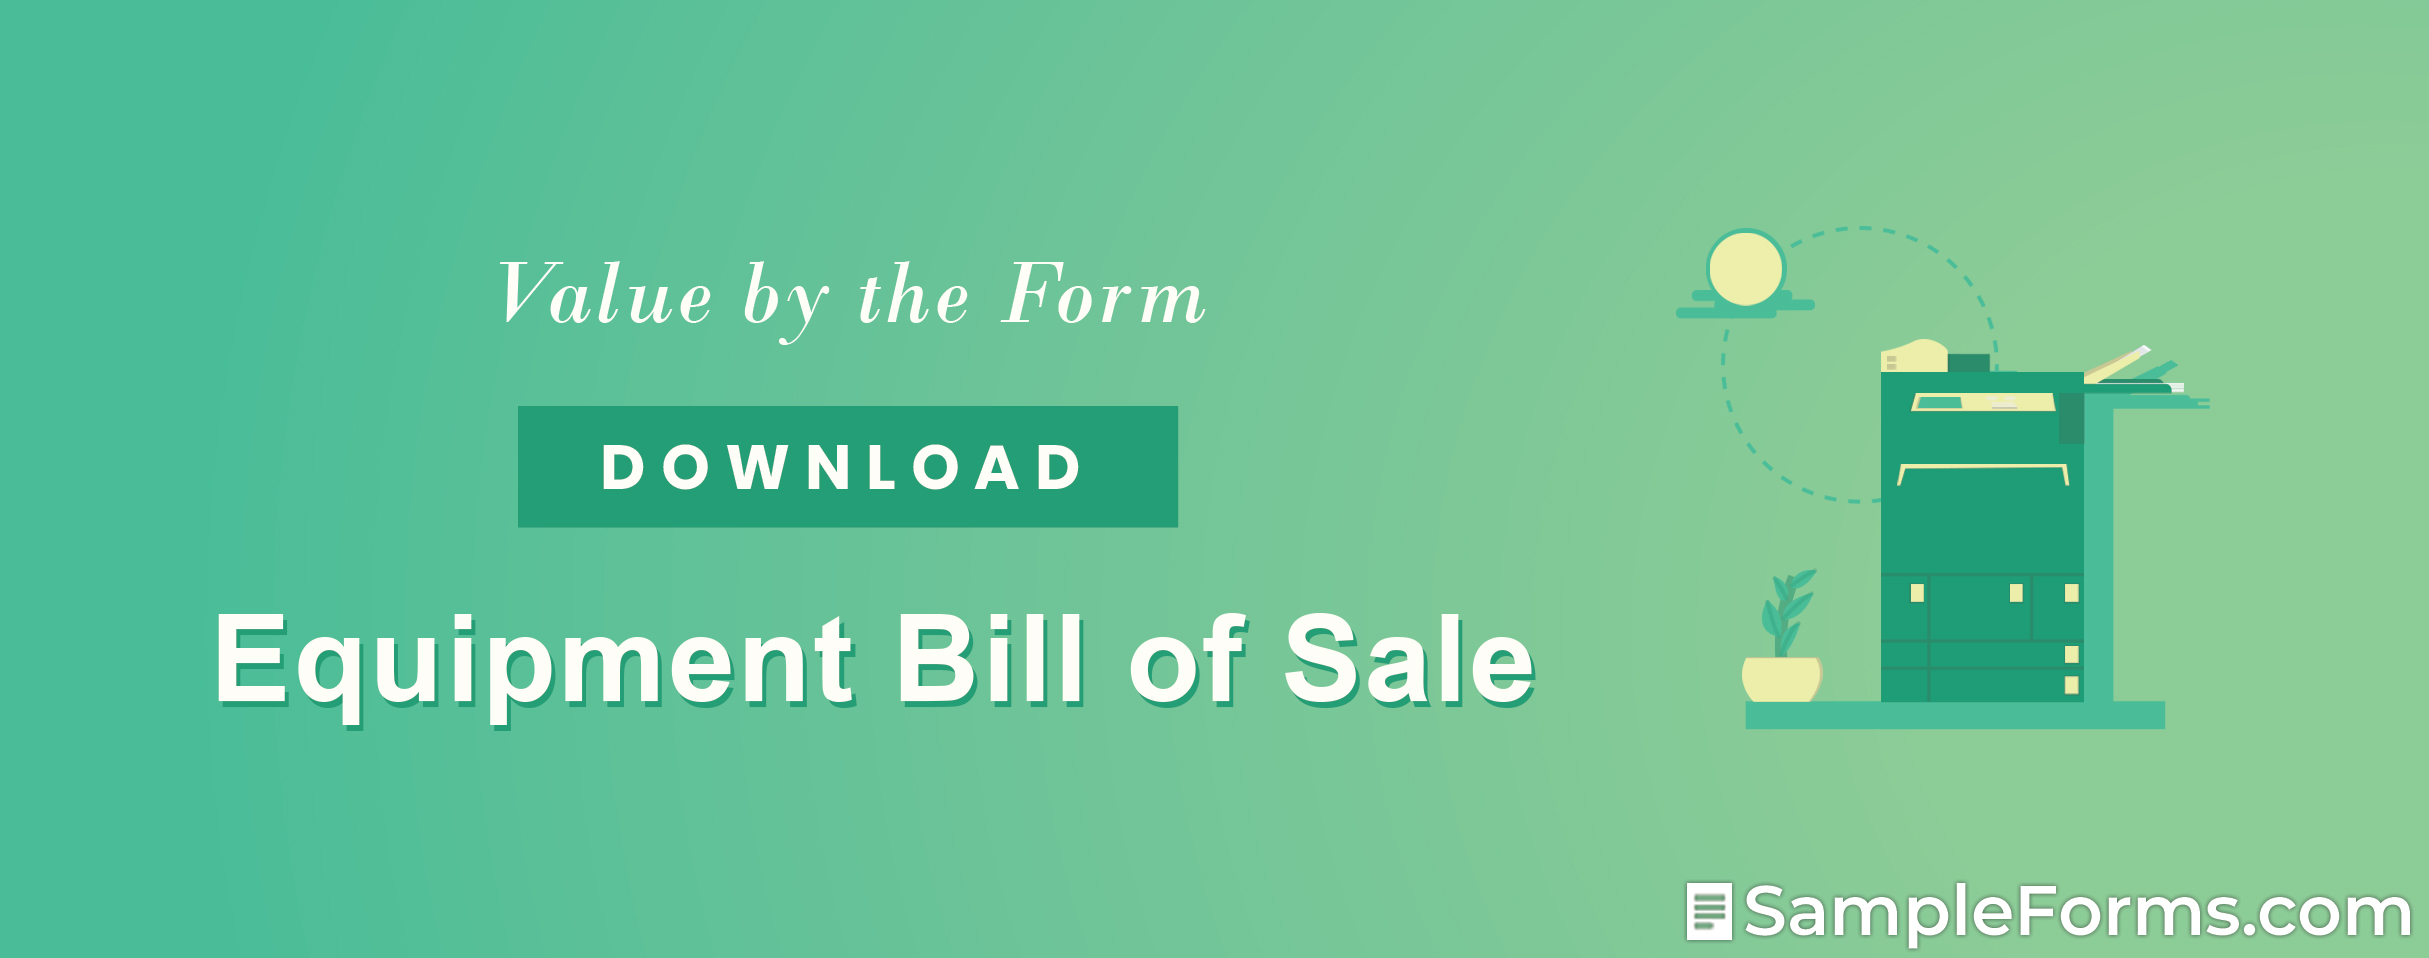 Equipment Bill of Sale Form